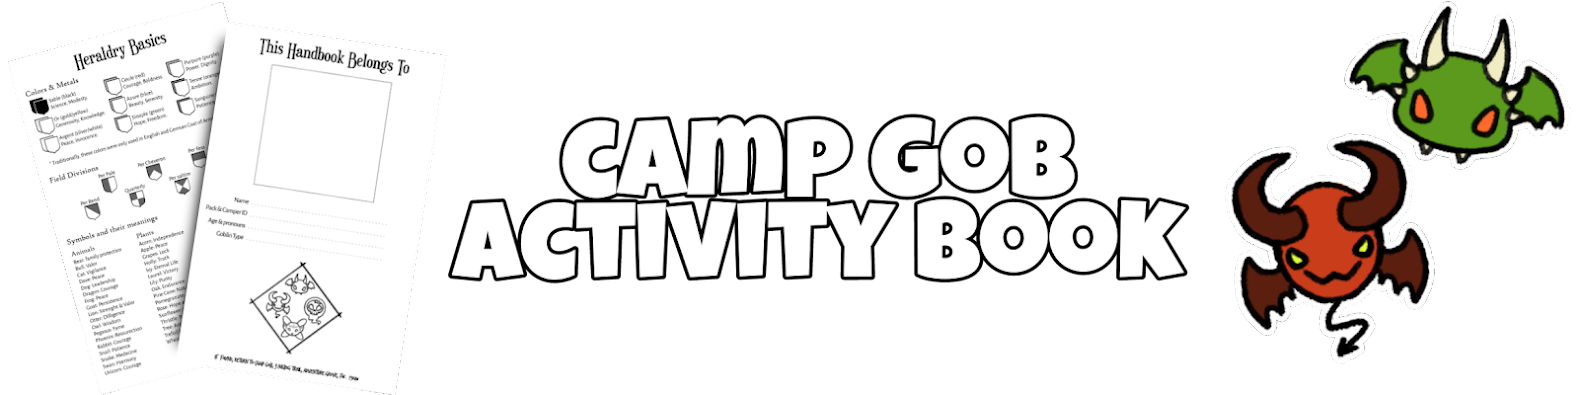 Camp Gob kid's Activity Book